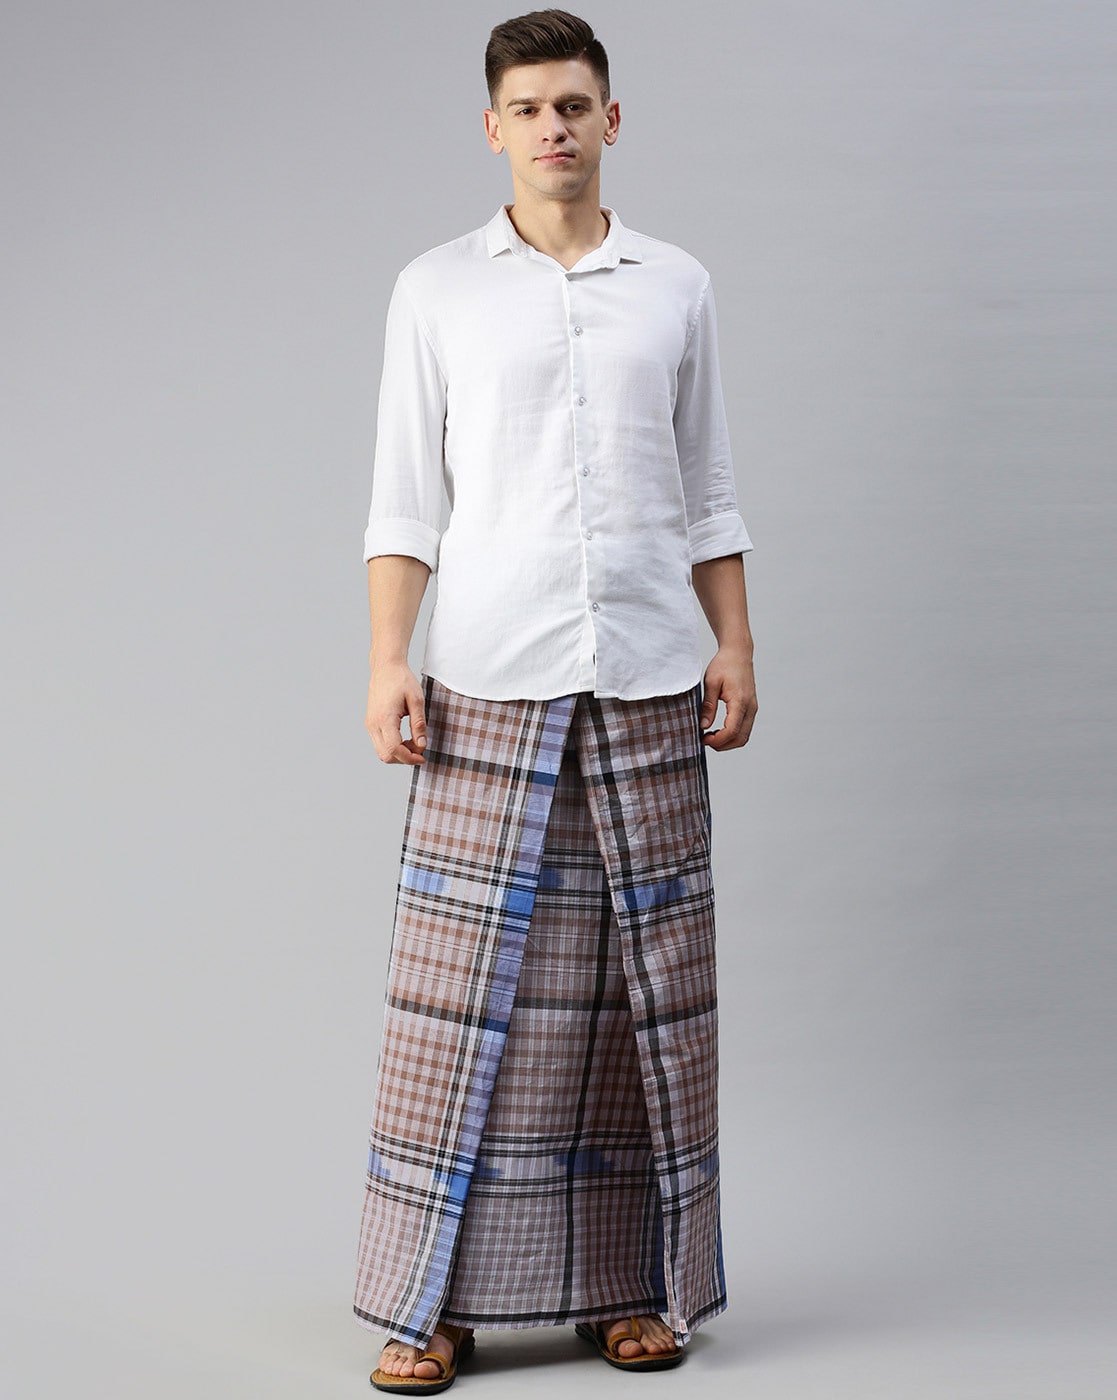 Royalty by Maluma Mens Pinstripe Wrap Skirt Suit Overlay Created For  Macys  Macys